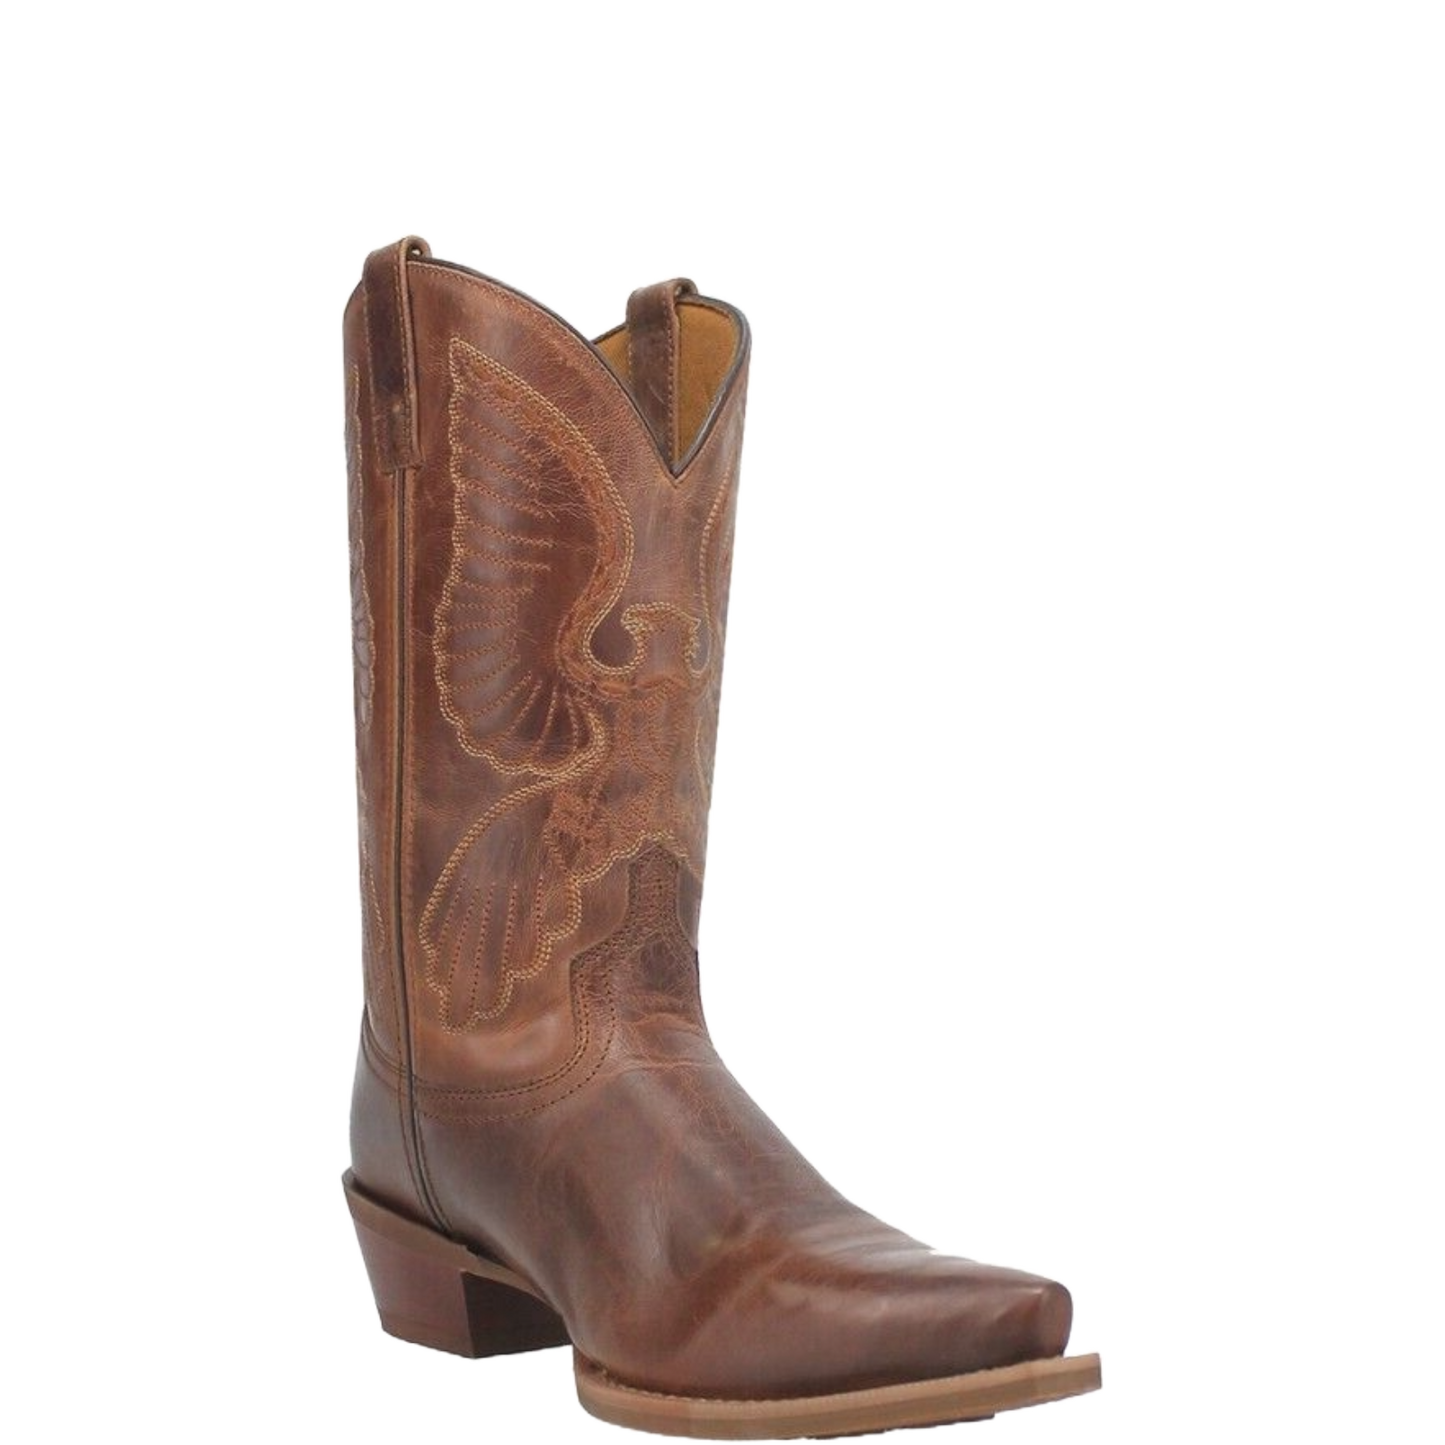 Laredo Men's Arno Taupe Snip Toe Western Boots 68572